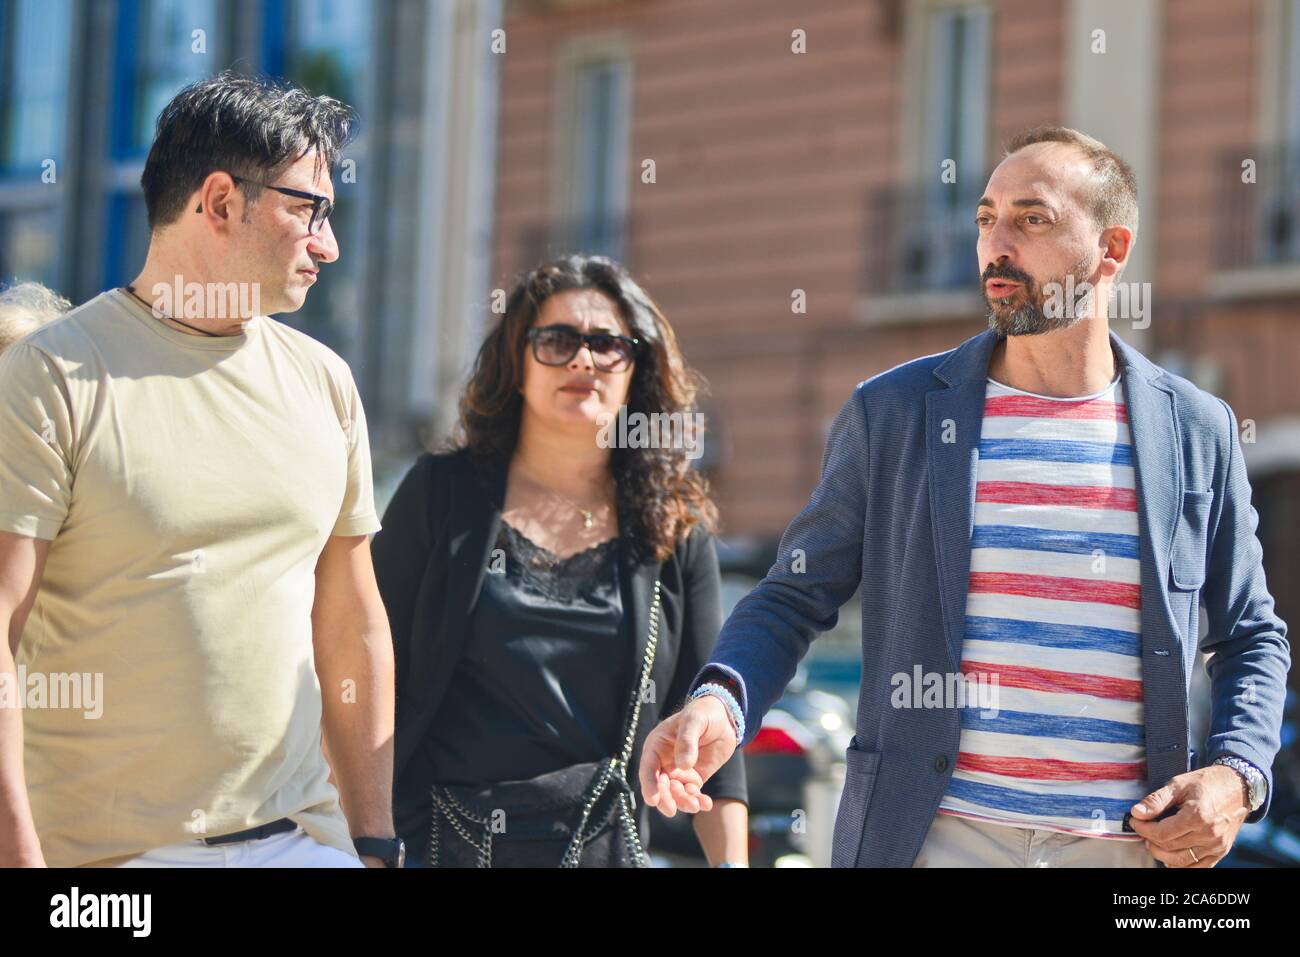 Italian people in Corso Vittorio Emanuele, Bari, Italy Stock Photo